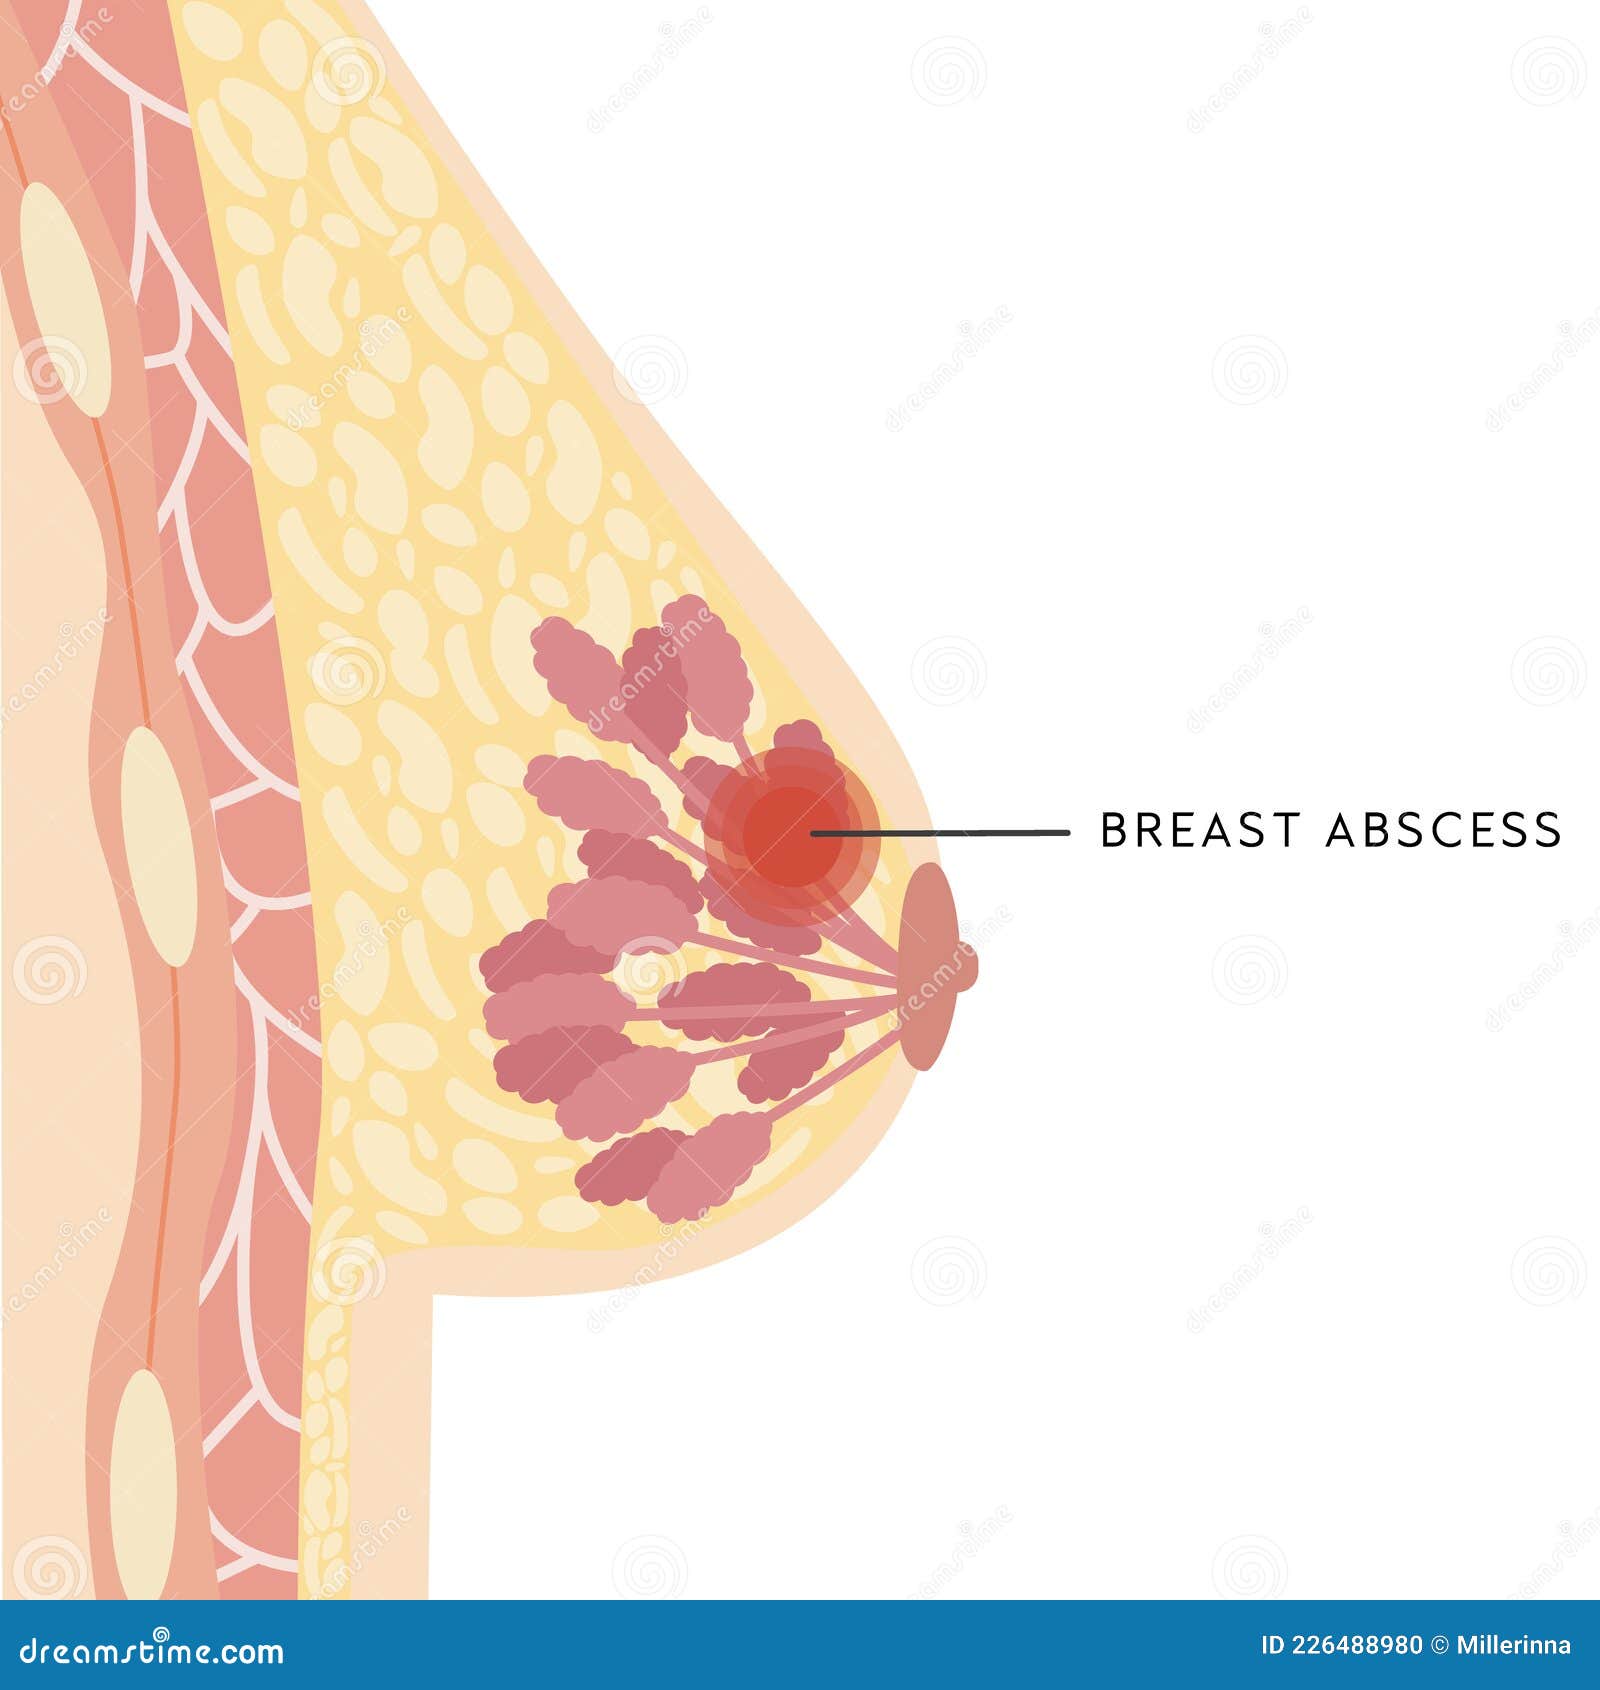 Breast abscess